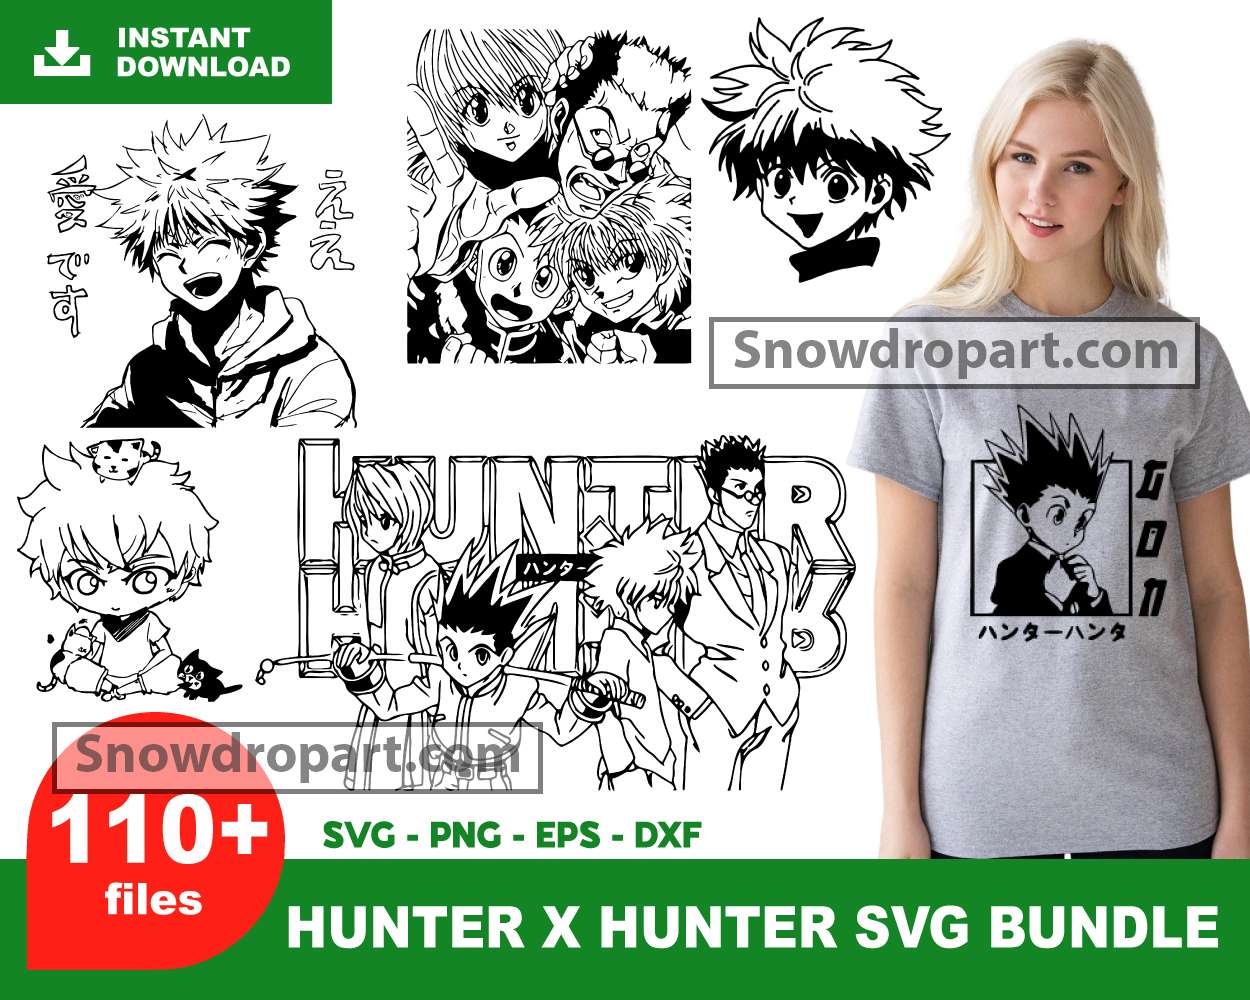 Hunter X Hunter Anime Svg, HxH Characters Svg, Anime Svg